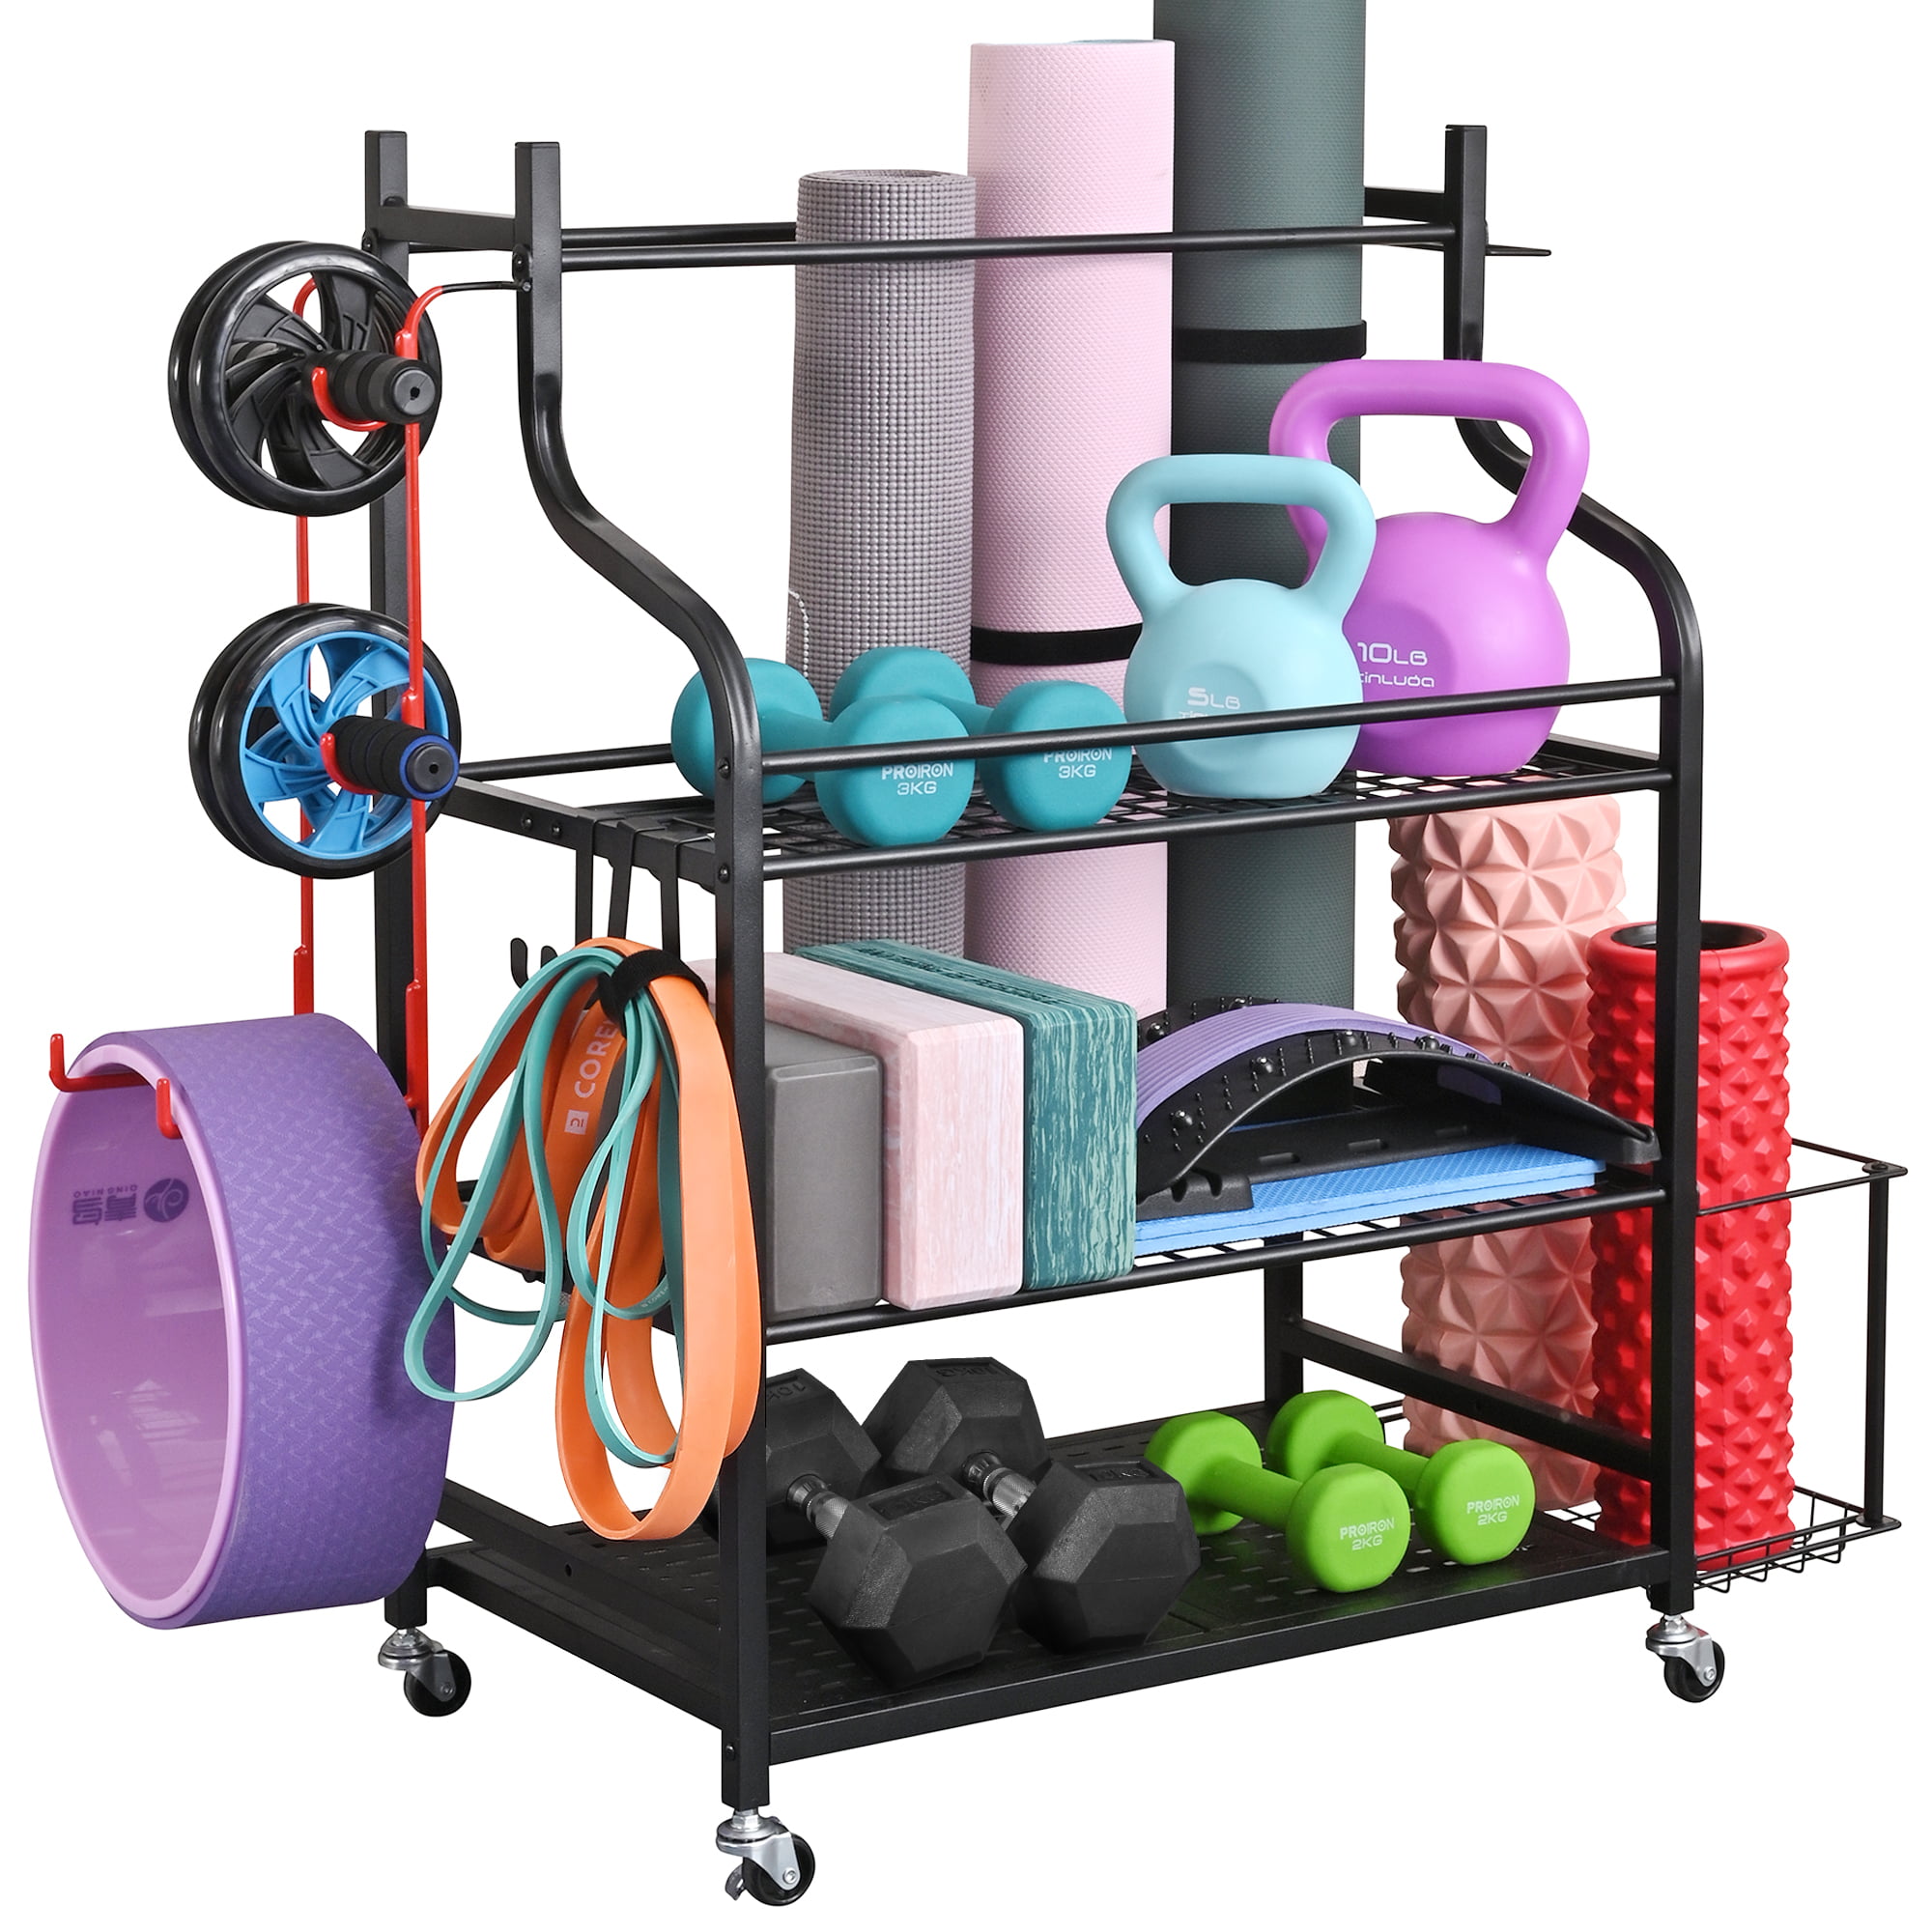 LTMATE 220 lbs. Yoga Mat Storage Racks Gym Sports Equipment Storage  organizer With Black Finish HDM731DM - The Home Depot